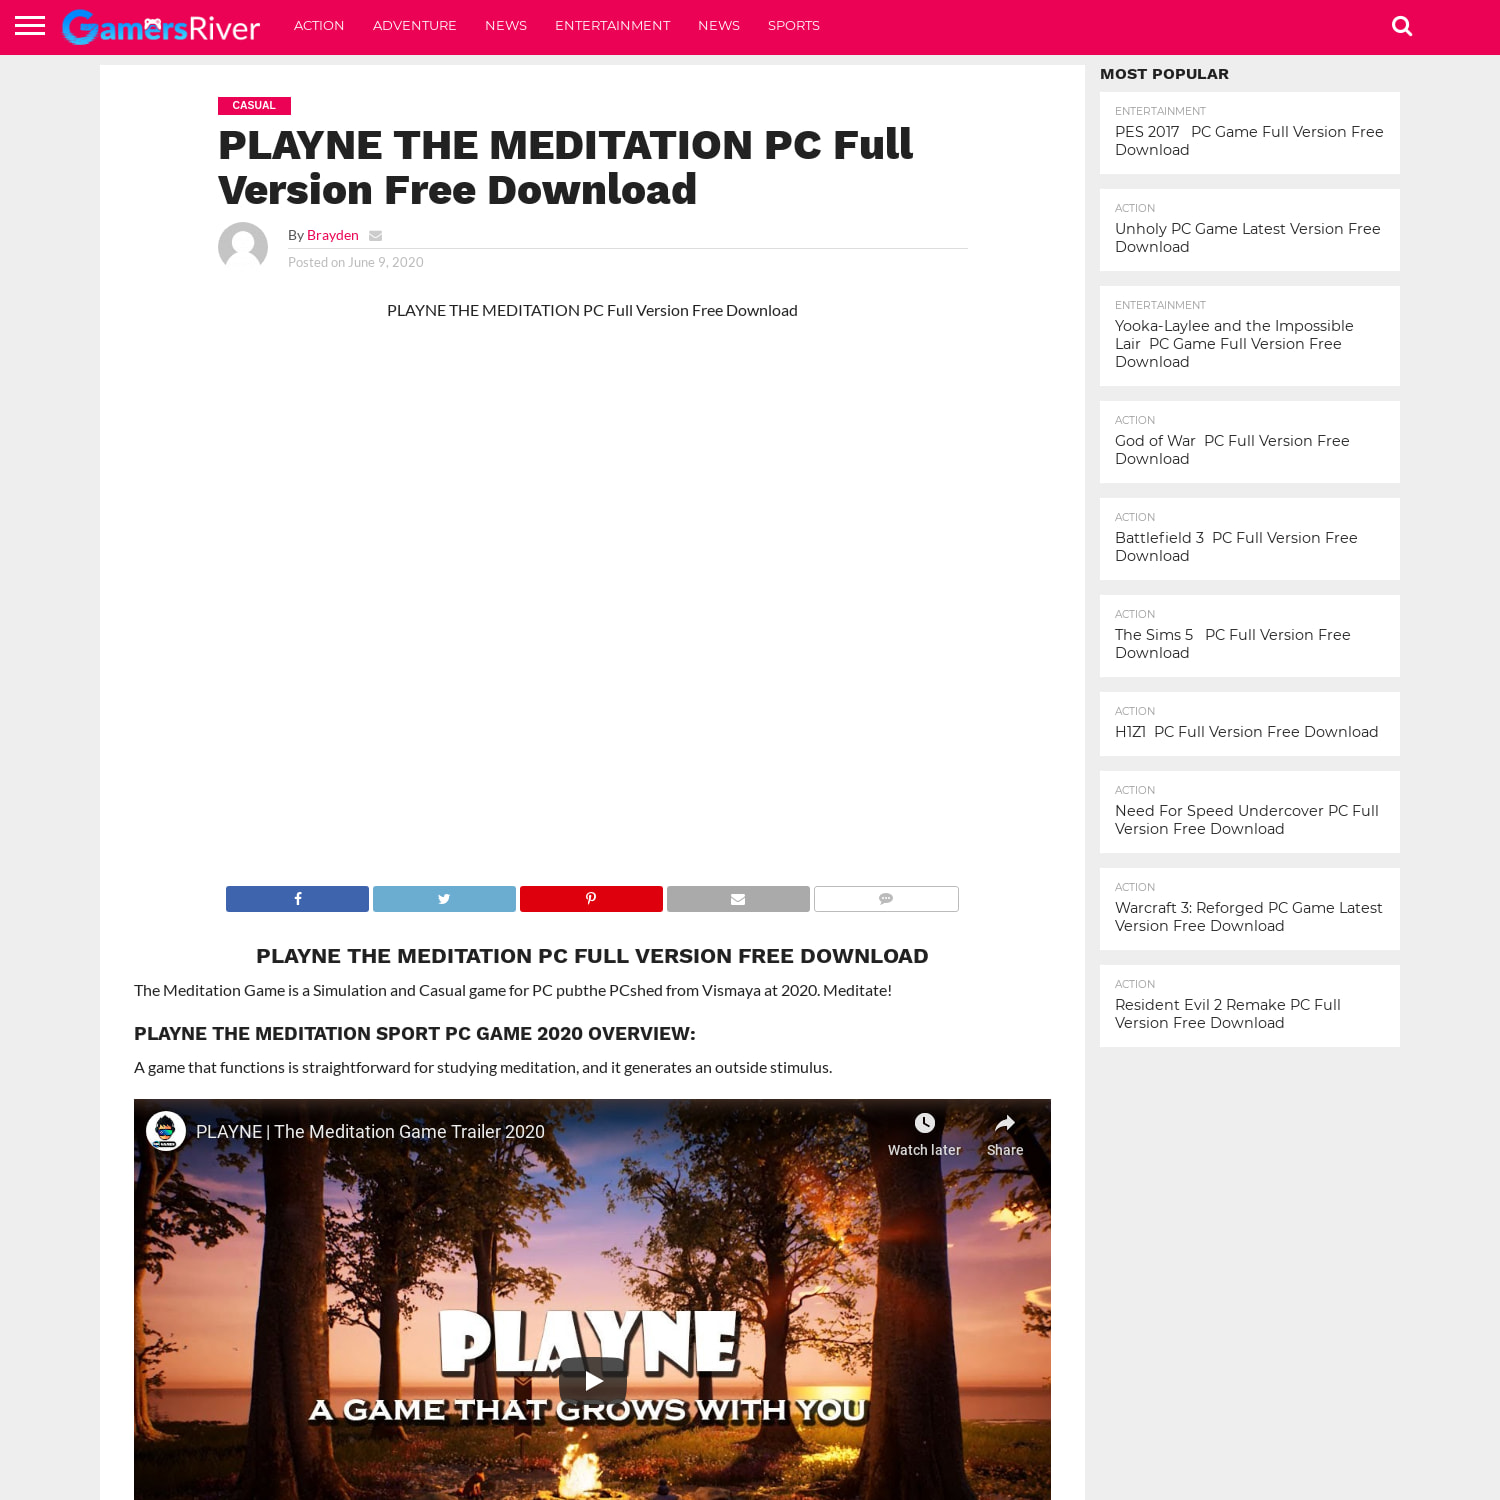 PLAYNE THE MEDITATION PC Full Version Free Download